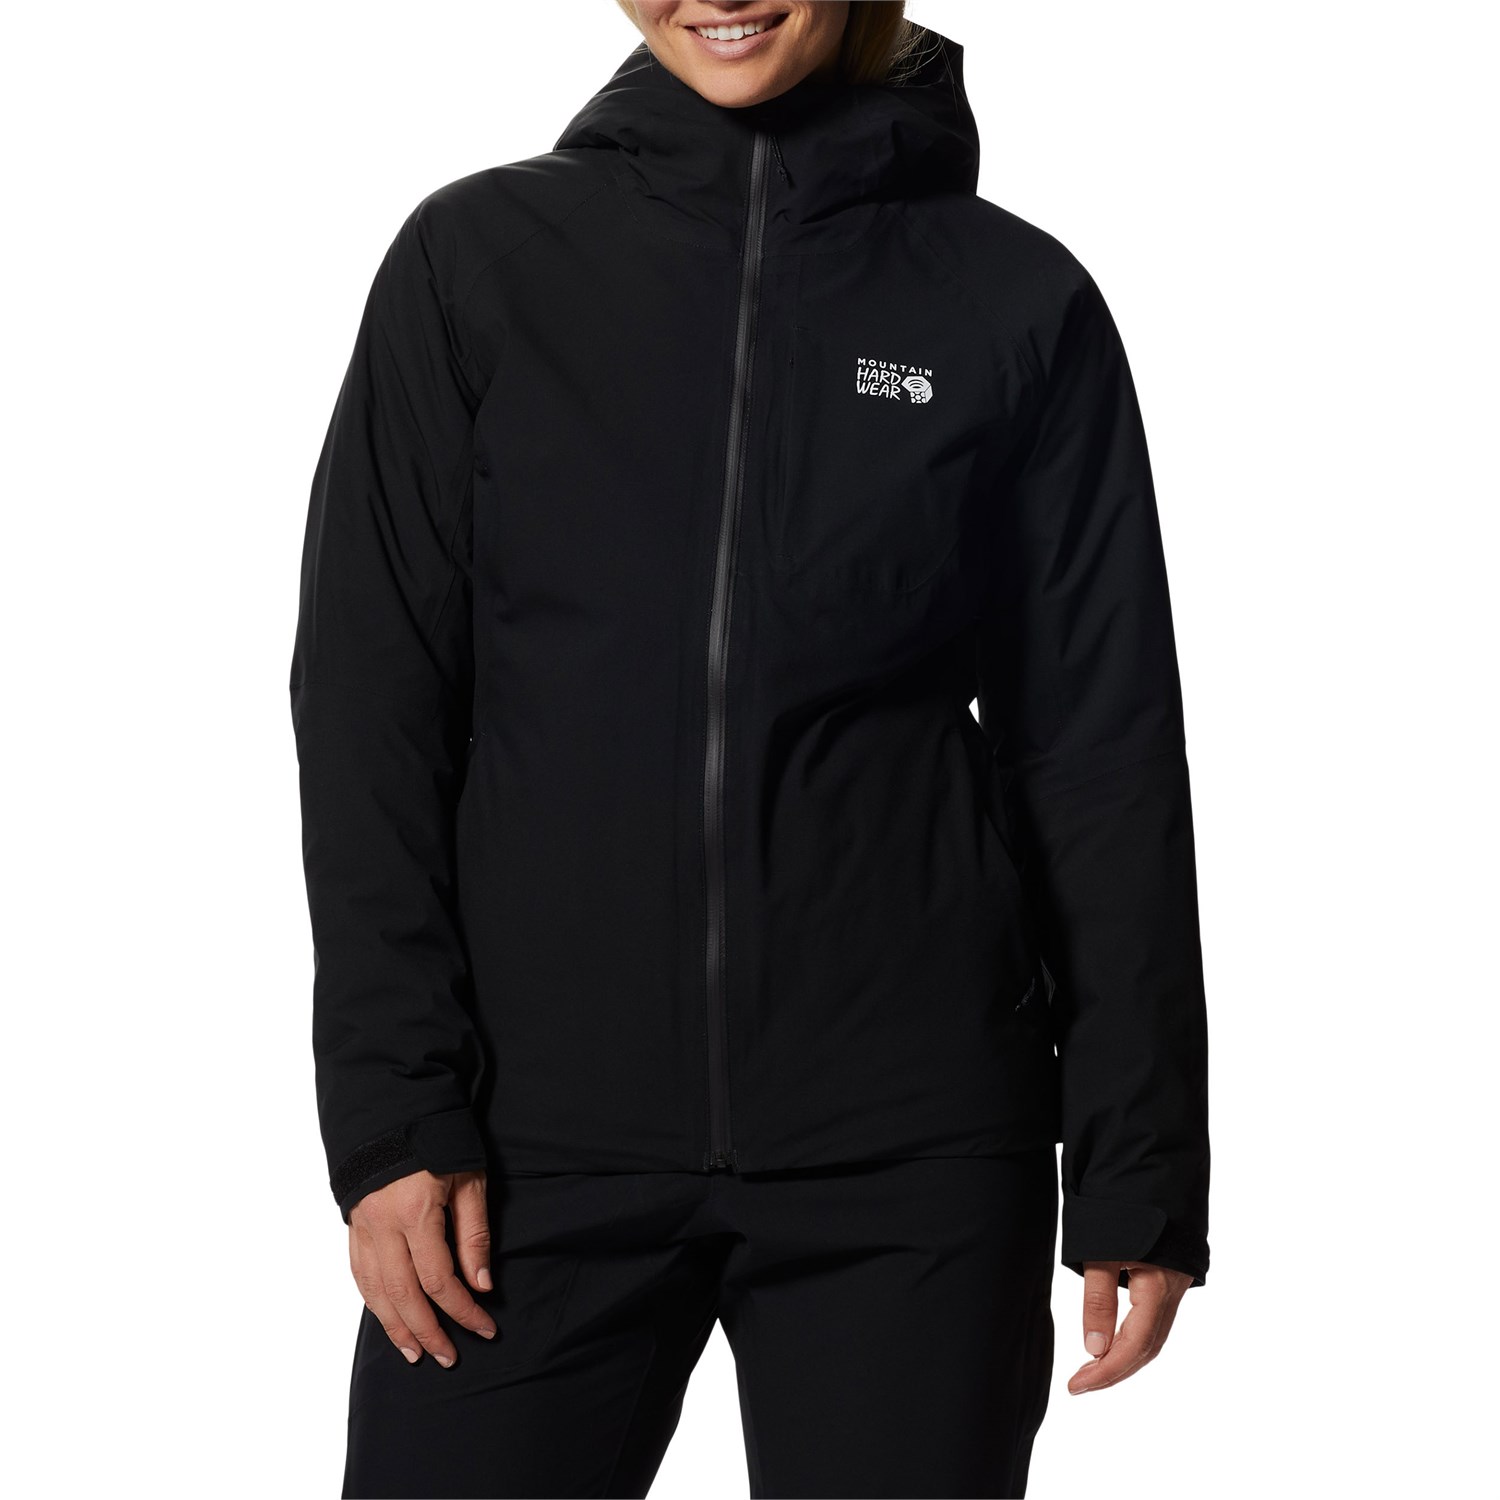 Куртка Mountain Hardwear Stretch Ozonic Insulated Jacket - Женская, черный куртка ti max утепленная на 2 года новая